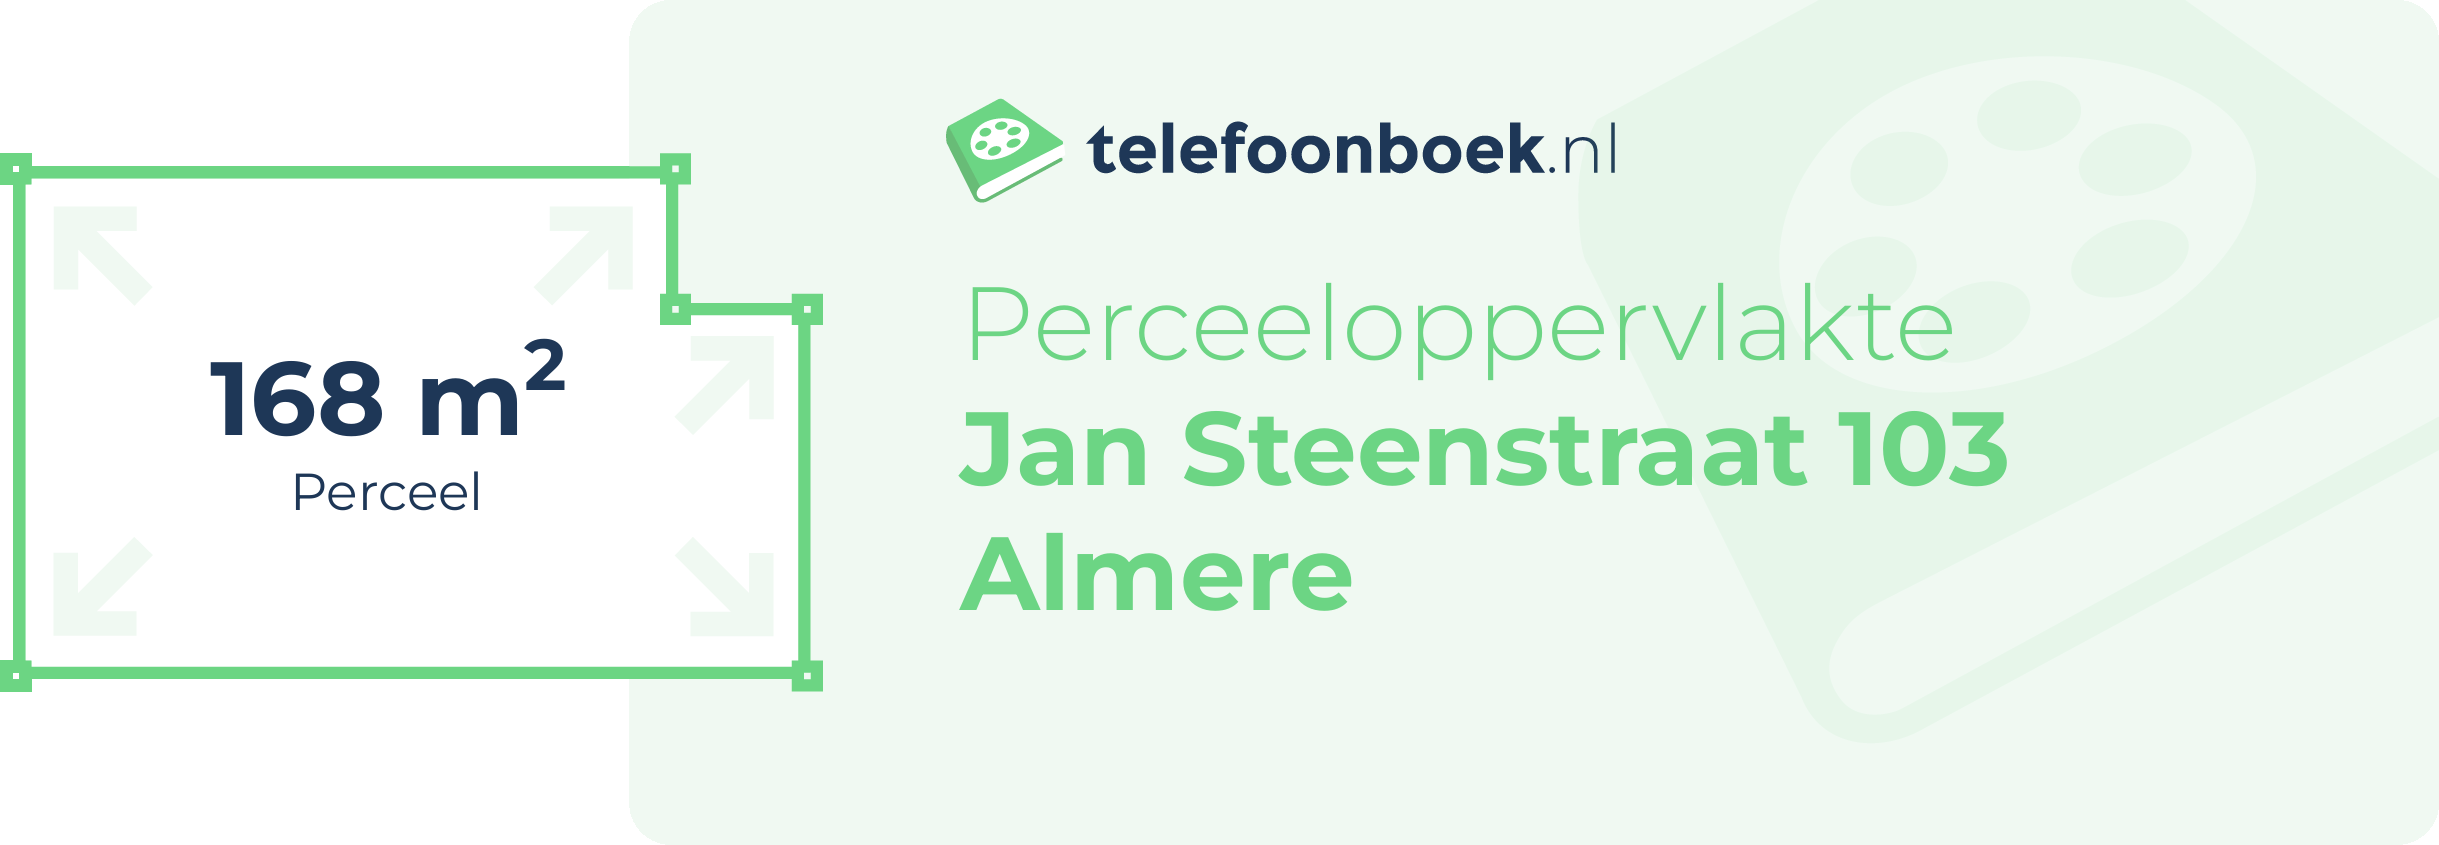 Perceeloppervlakte Jan Steenstraat 103 Almere